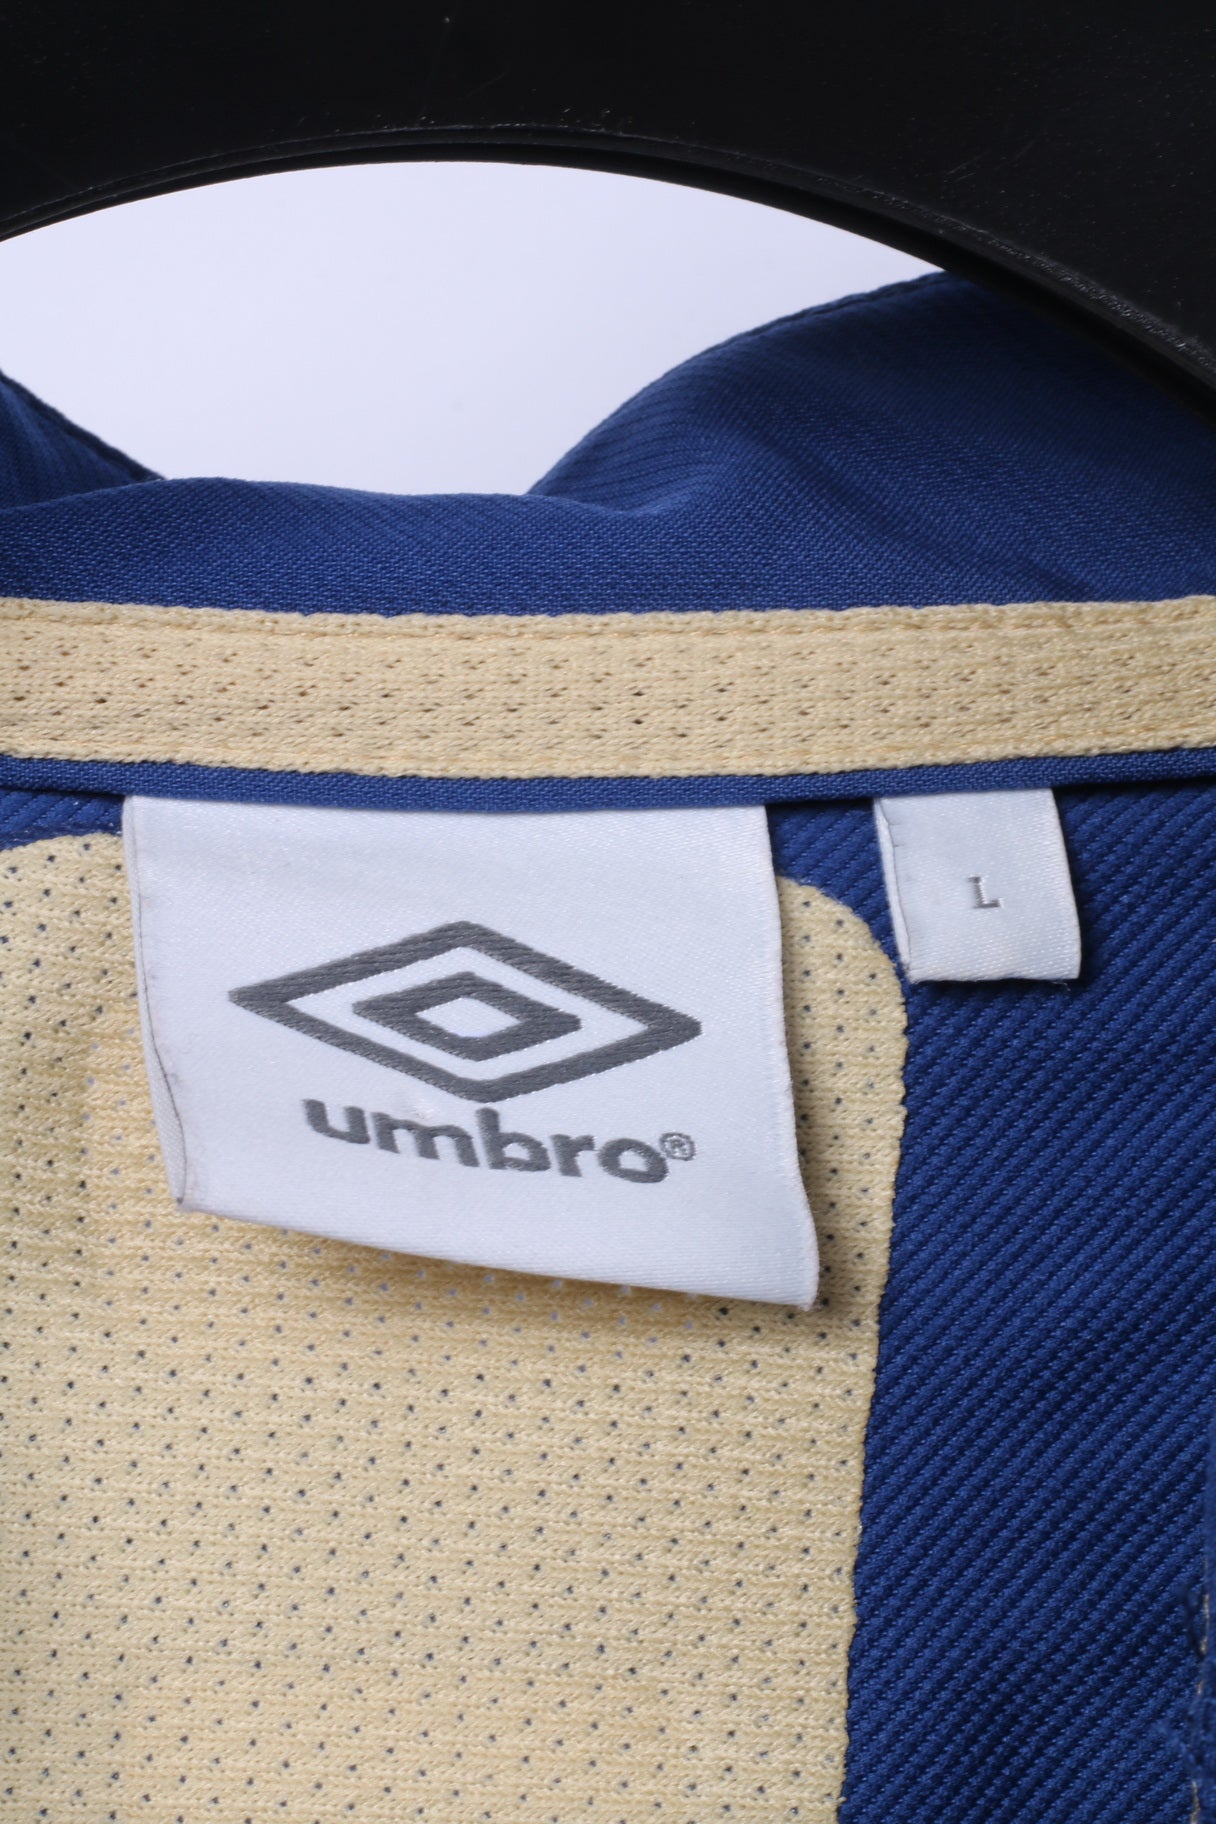 Umbro Veste pull L pour homme Bleu léger Sportswear Avtive Run Gym Top